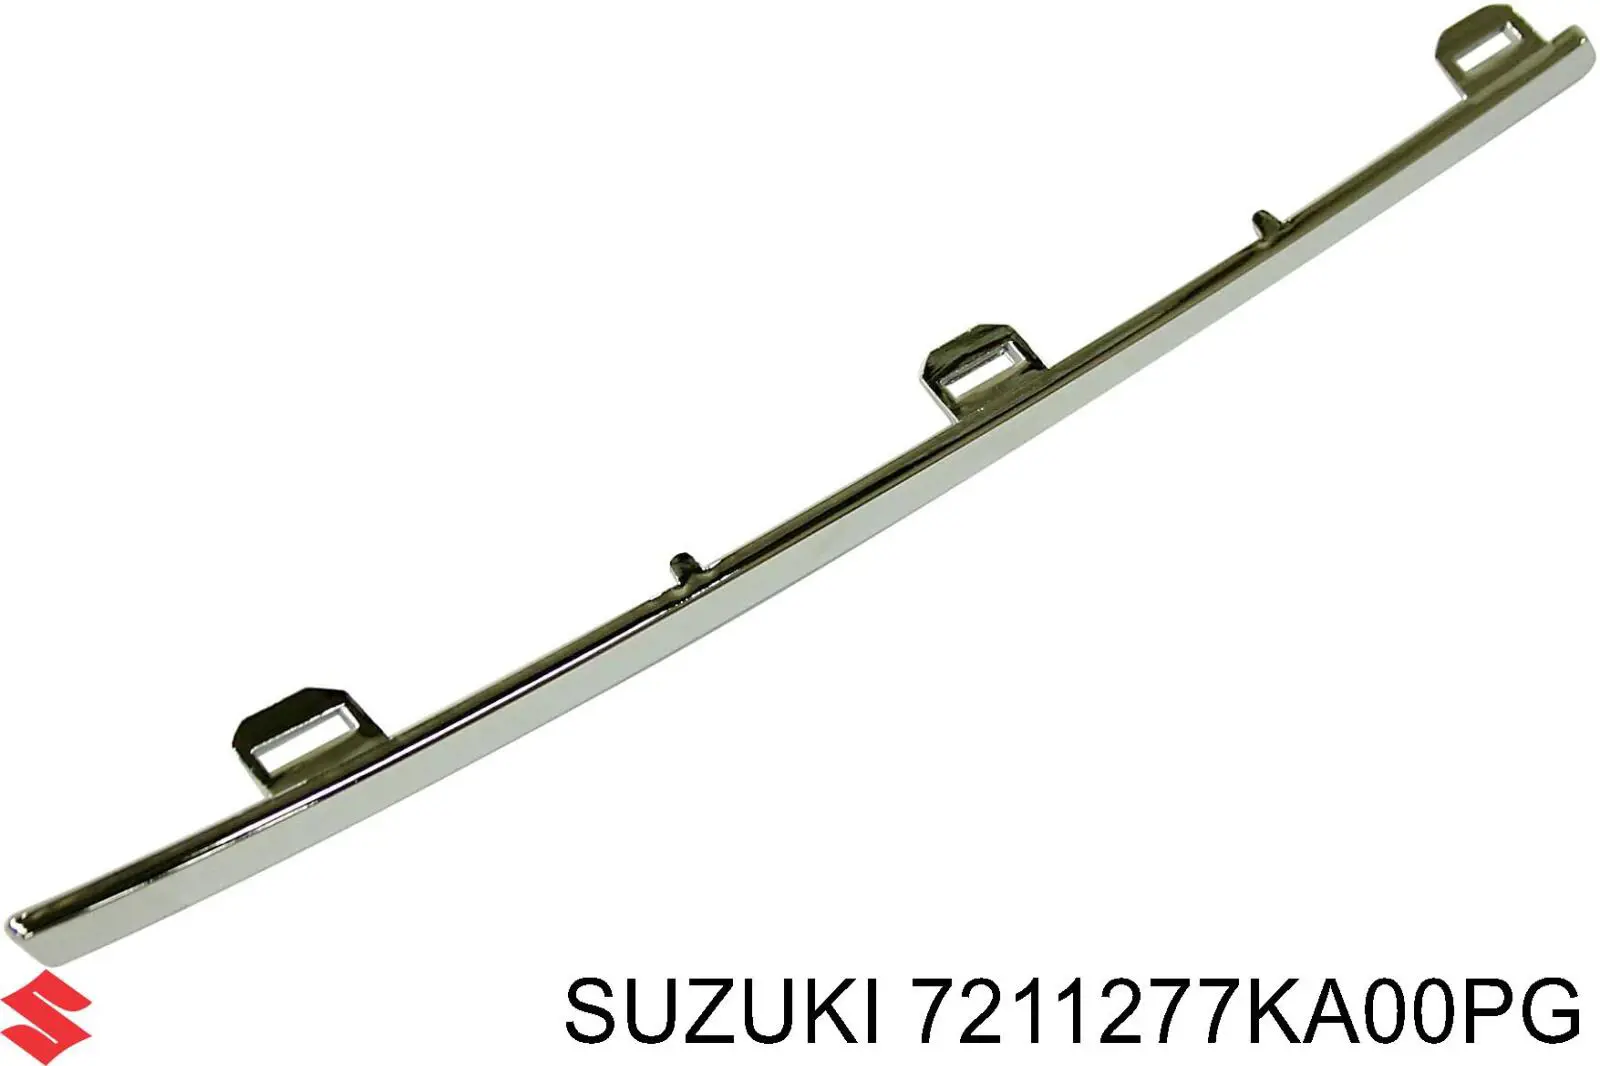 7211277KA00PG Suzuki moldura de rejilla de radiador